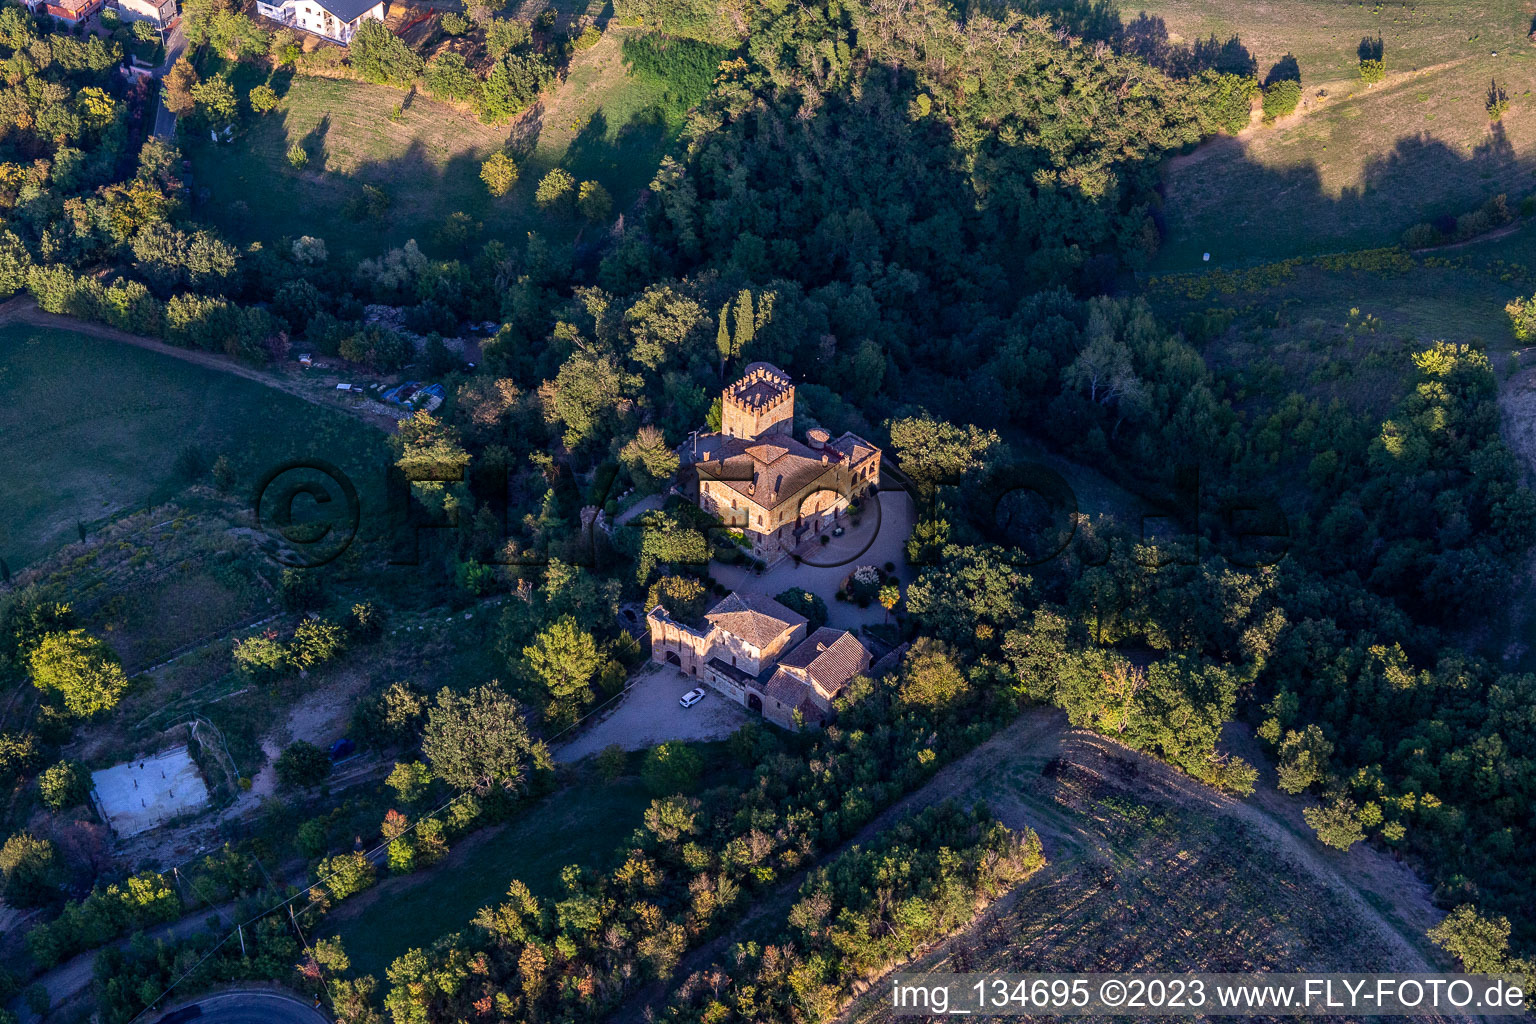 Castello della Torricella bei Scandiano im Bundesland Reggio Emilia, Italien